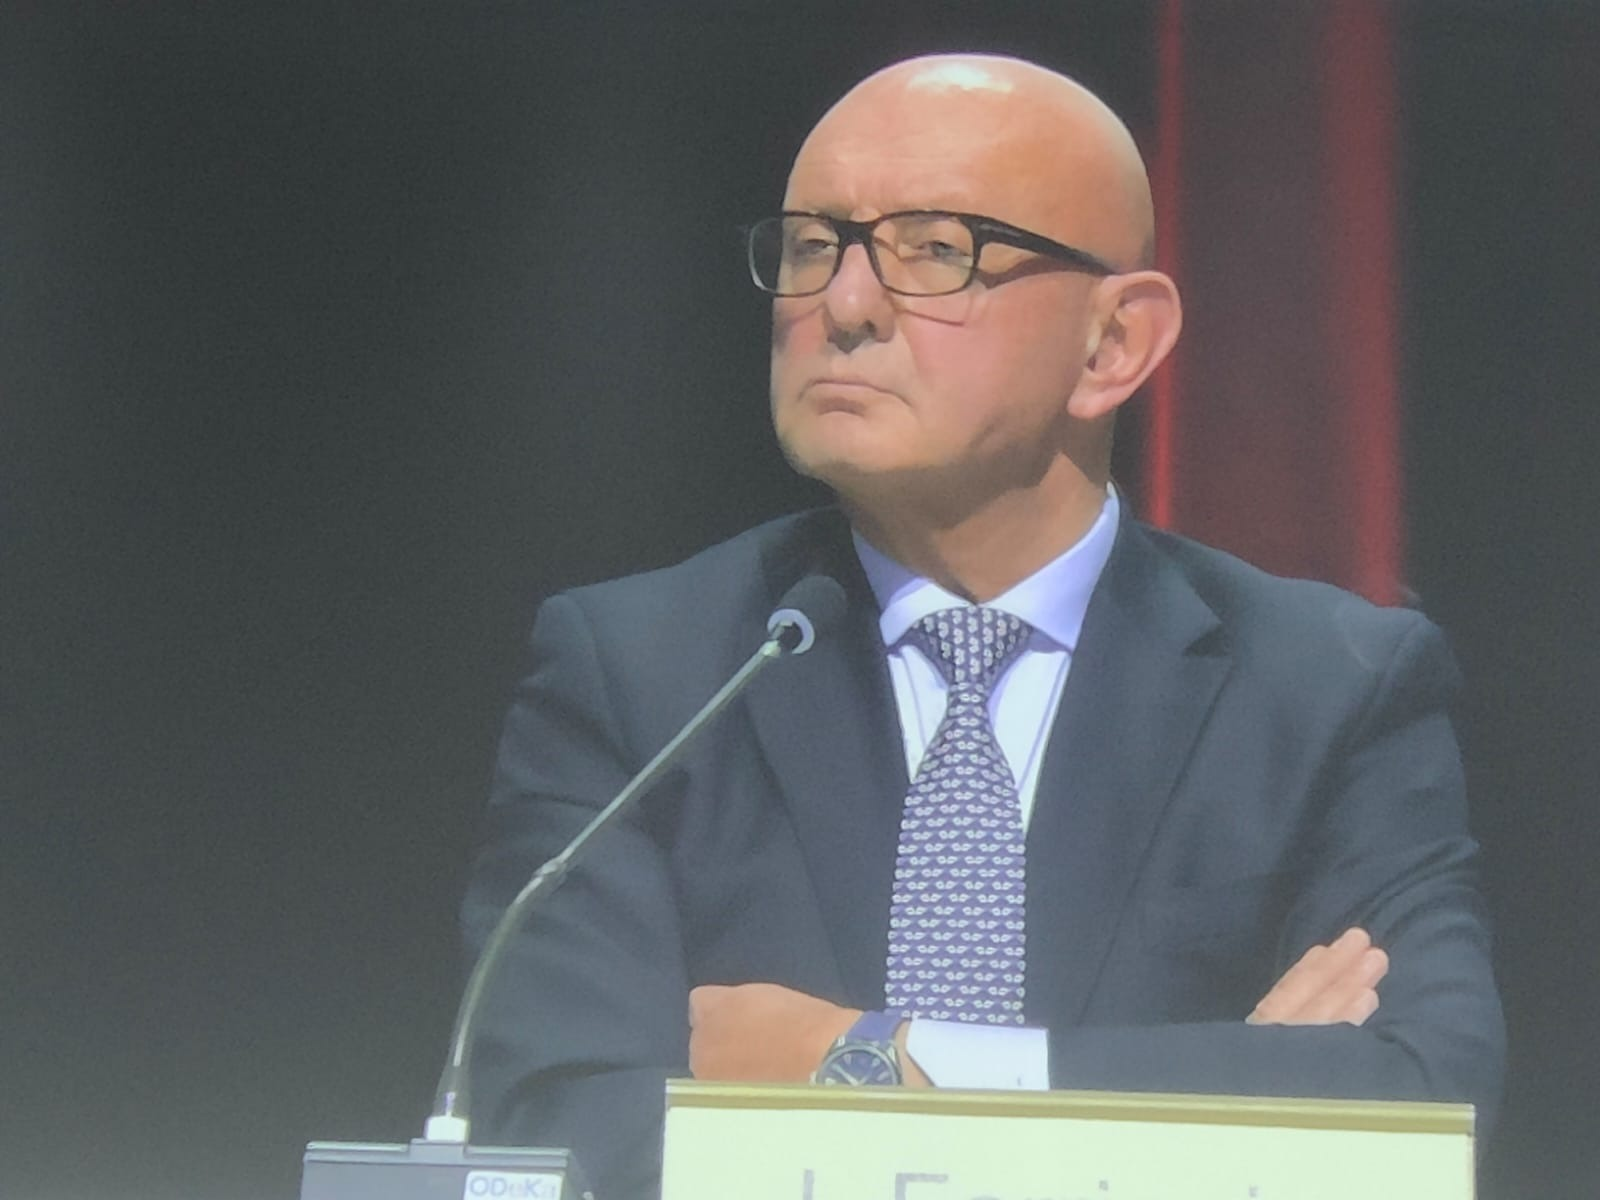 GAISF dissolution "a step towards a better future", claims Ferriani